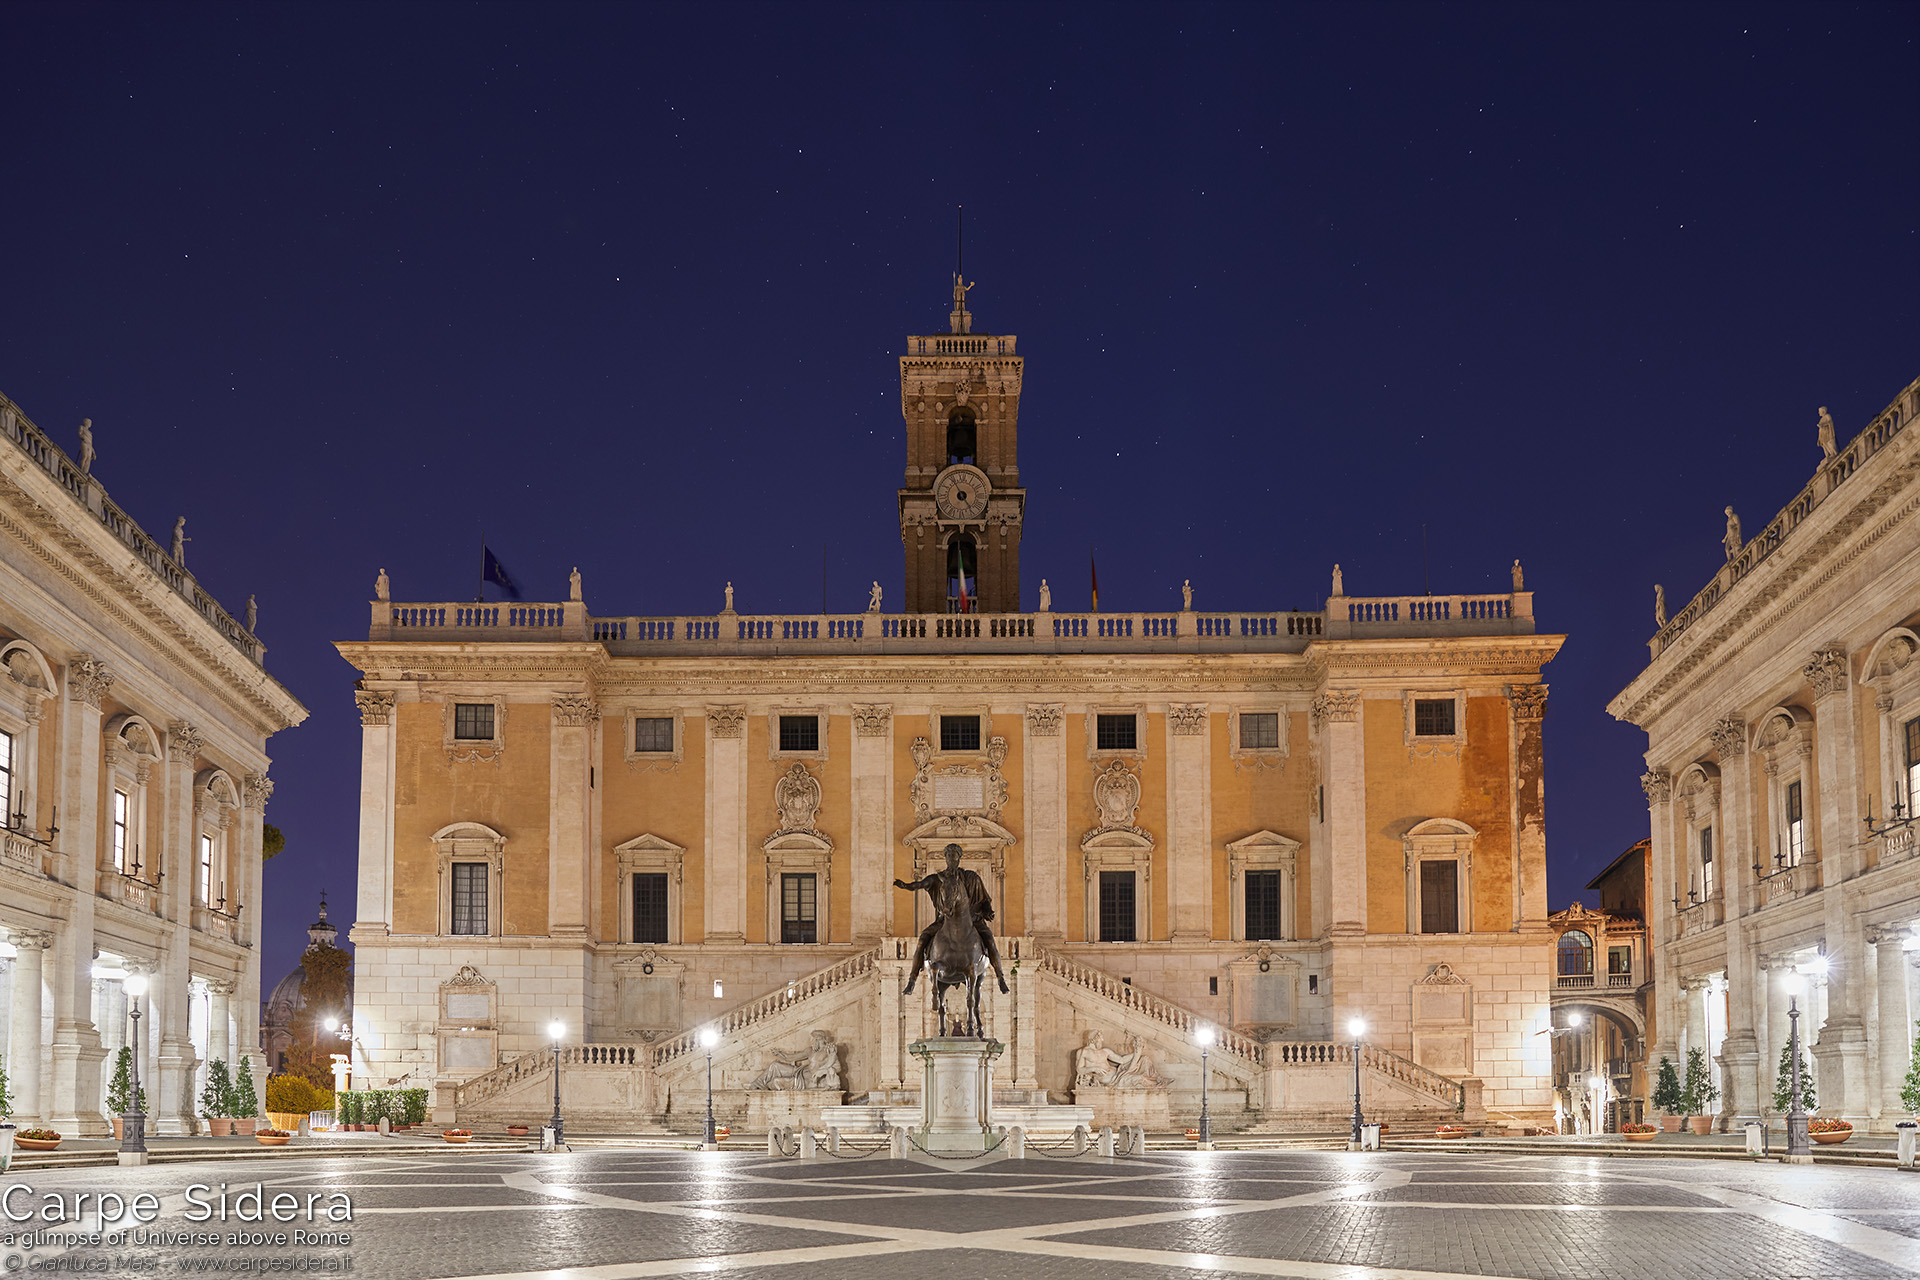 3. The Orion constellations rises behind the Palazzo Senatorio.